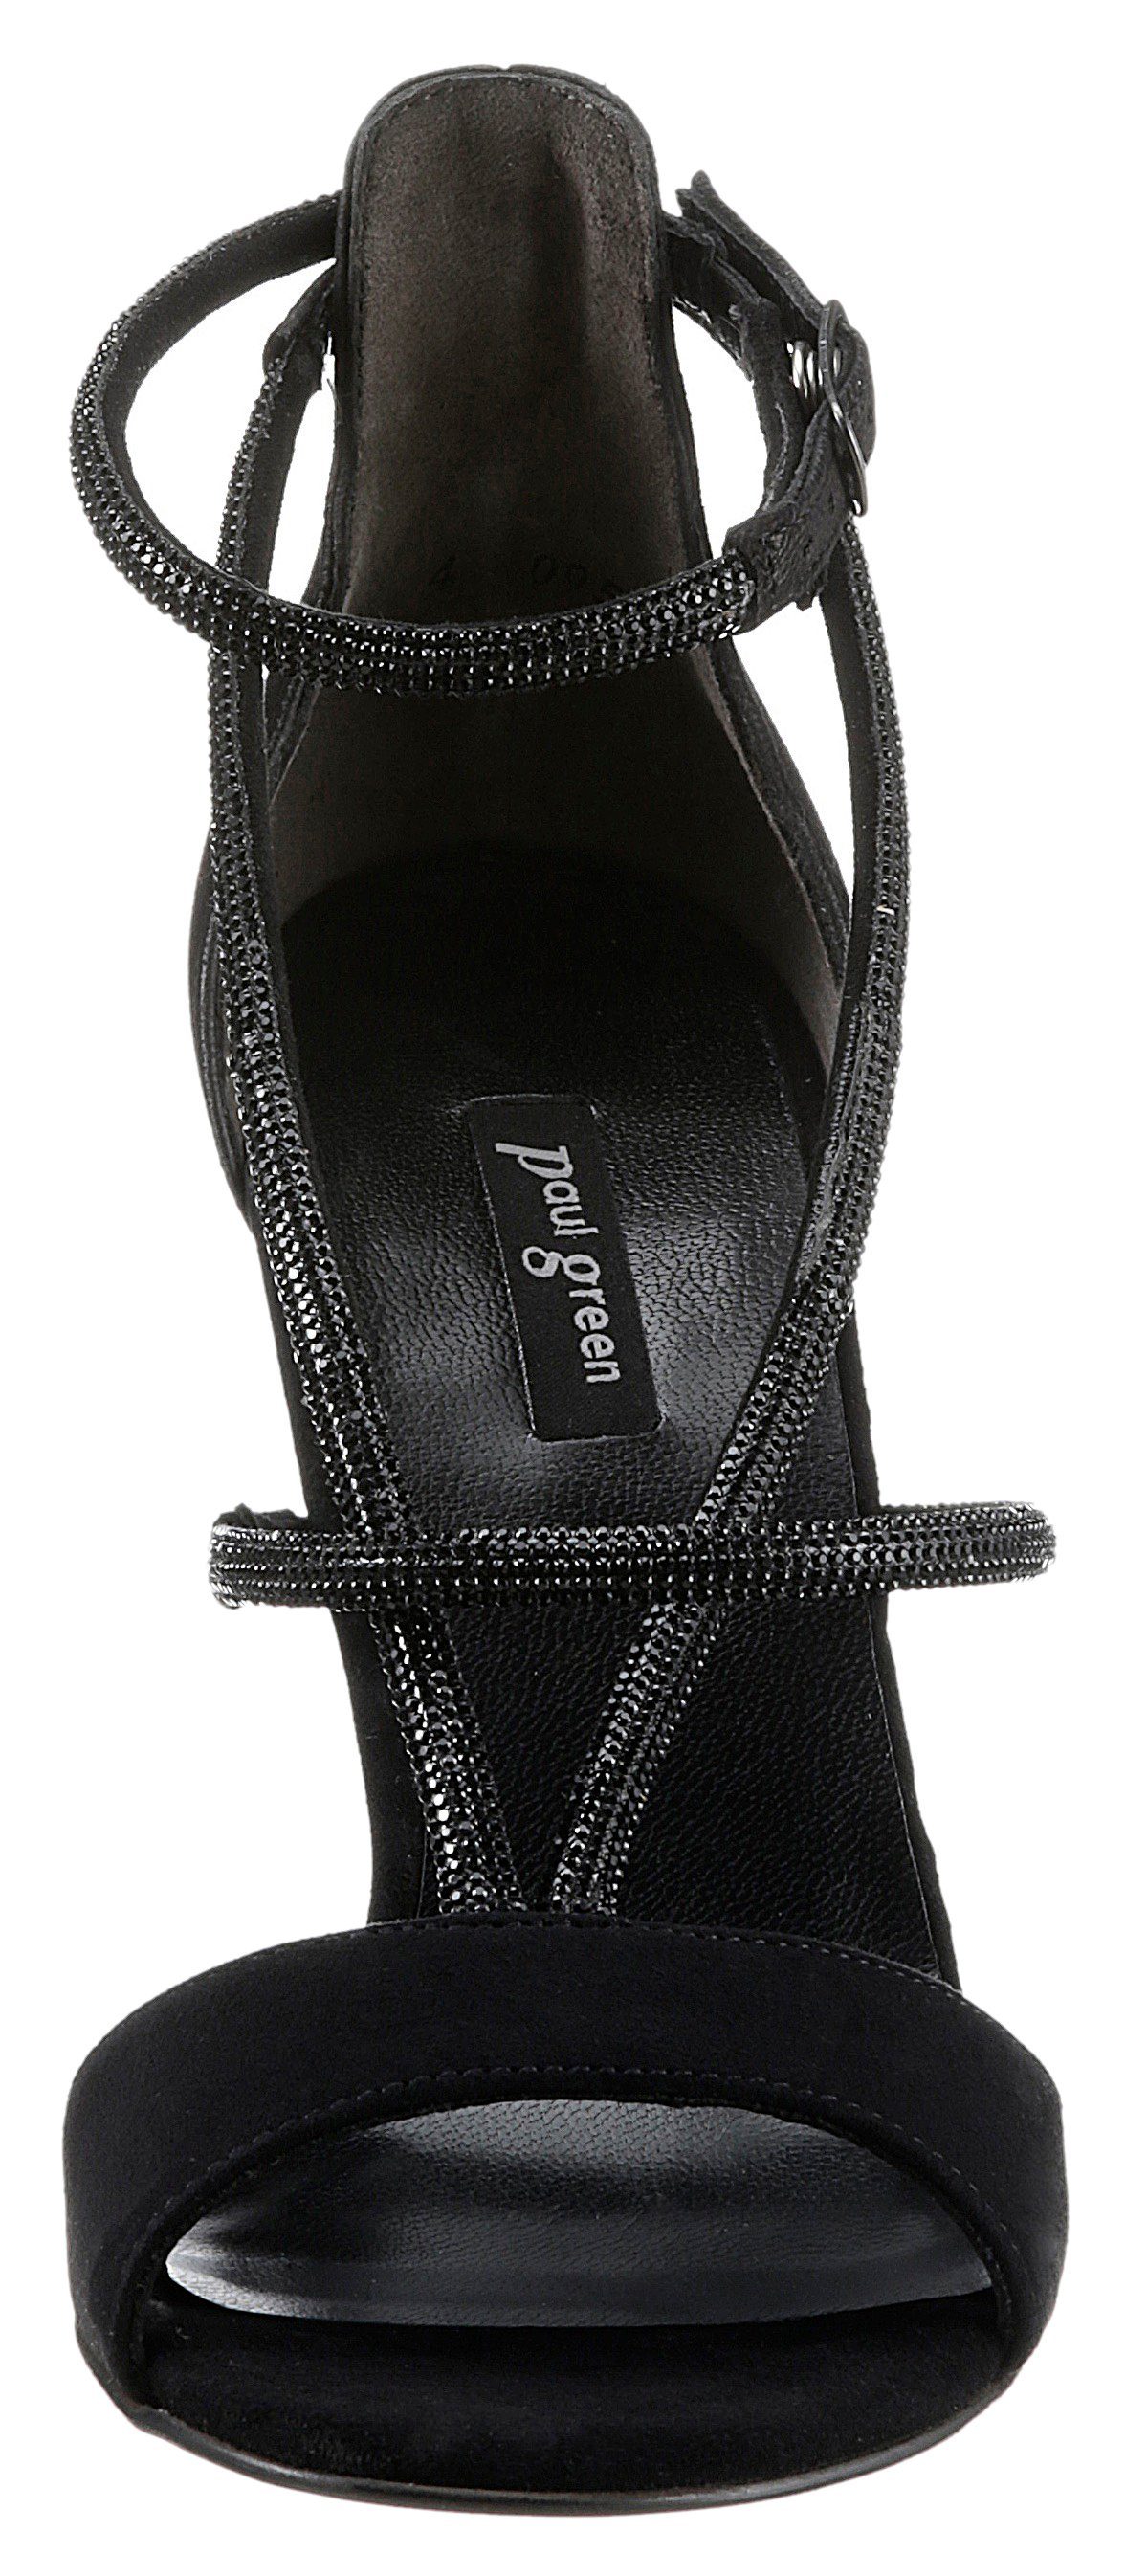 Paul Green Sandalette schwarz eleganter in Optik